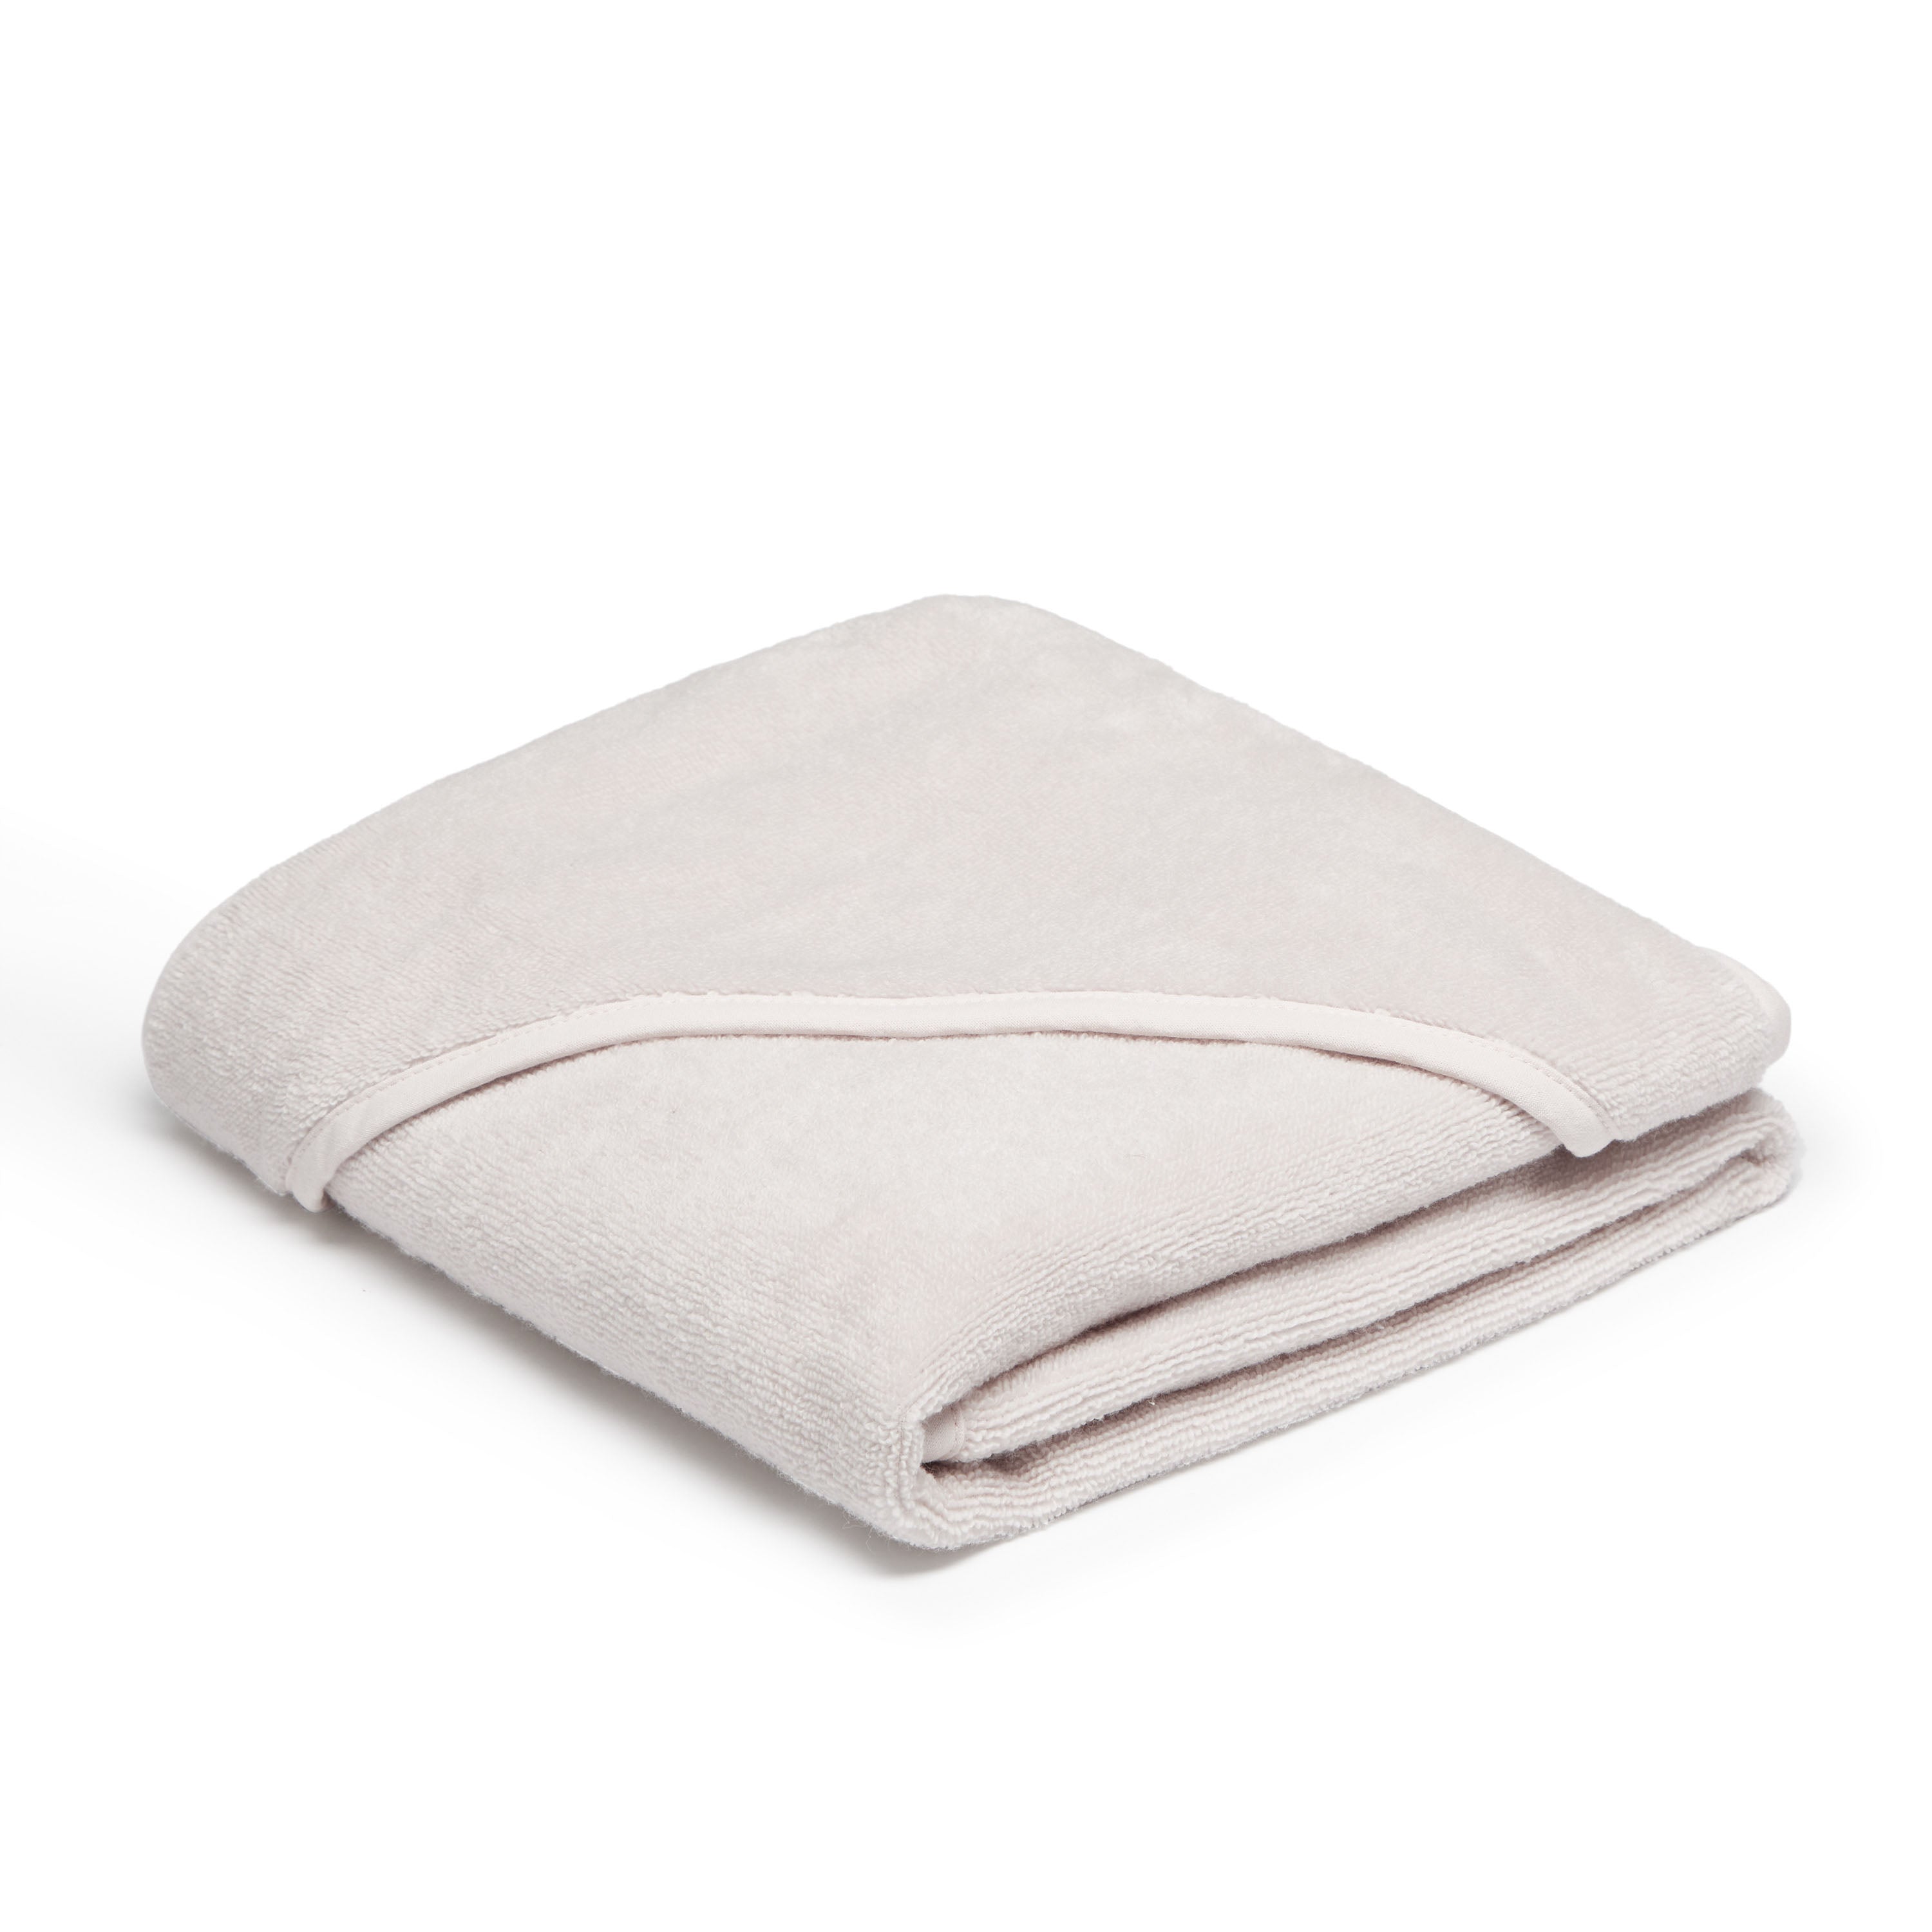 Baby Hooded Towel by Bedfolk